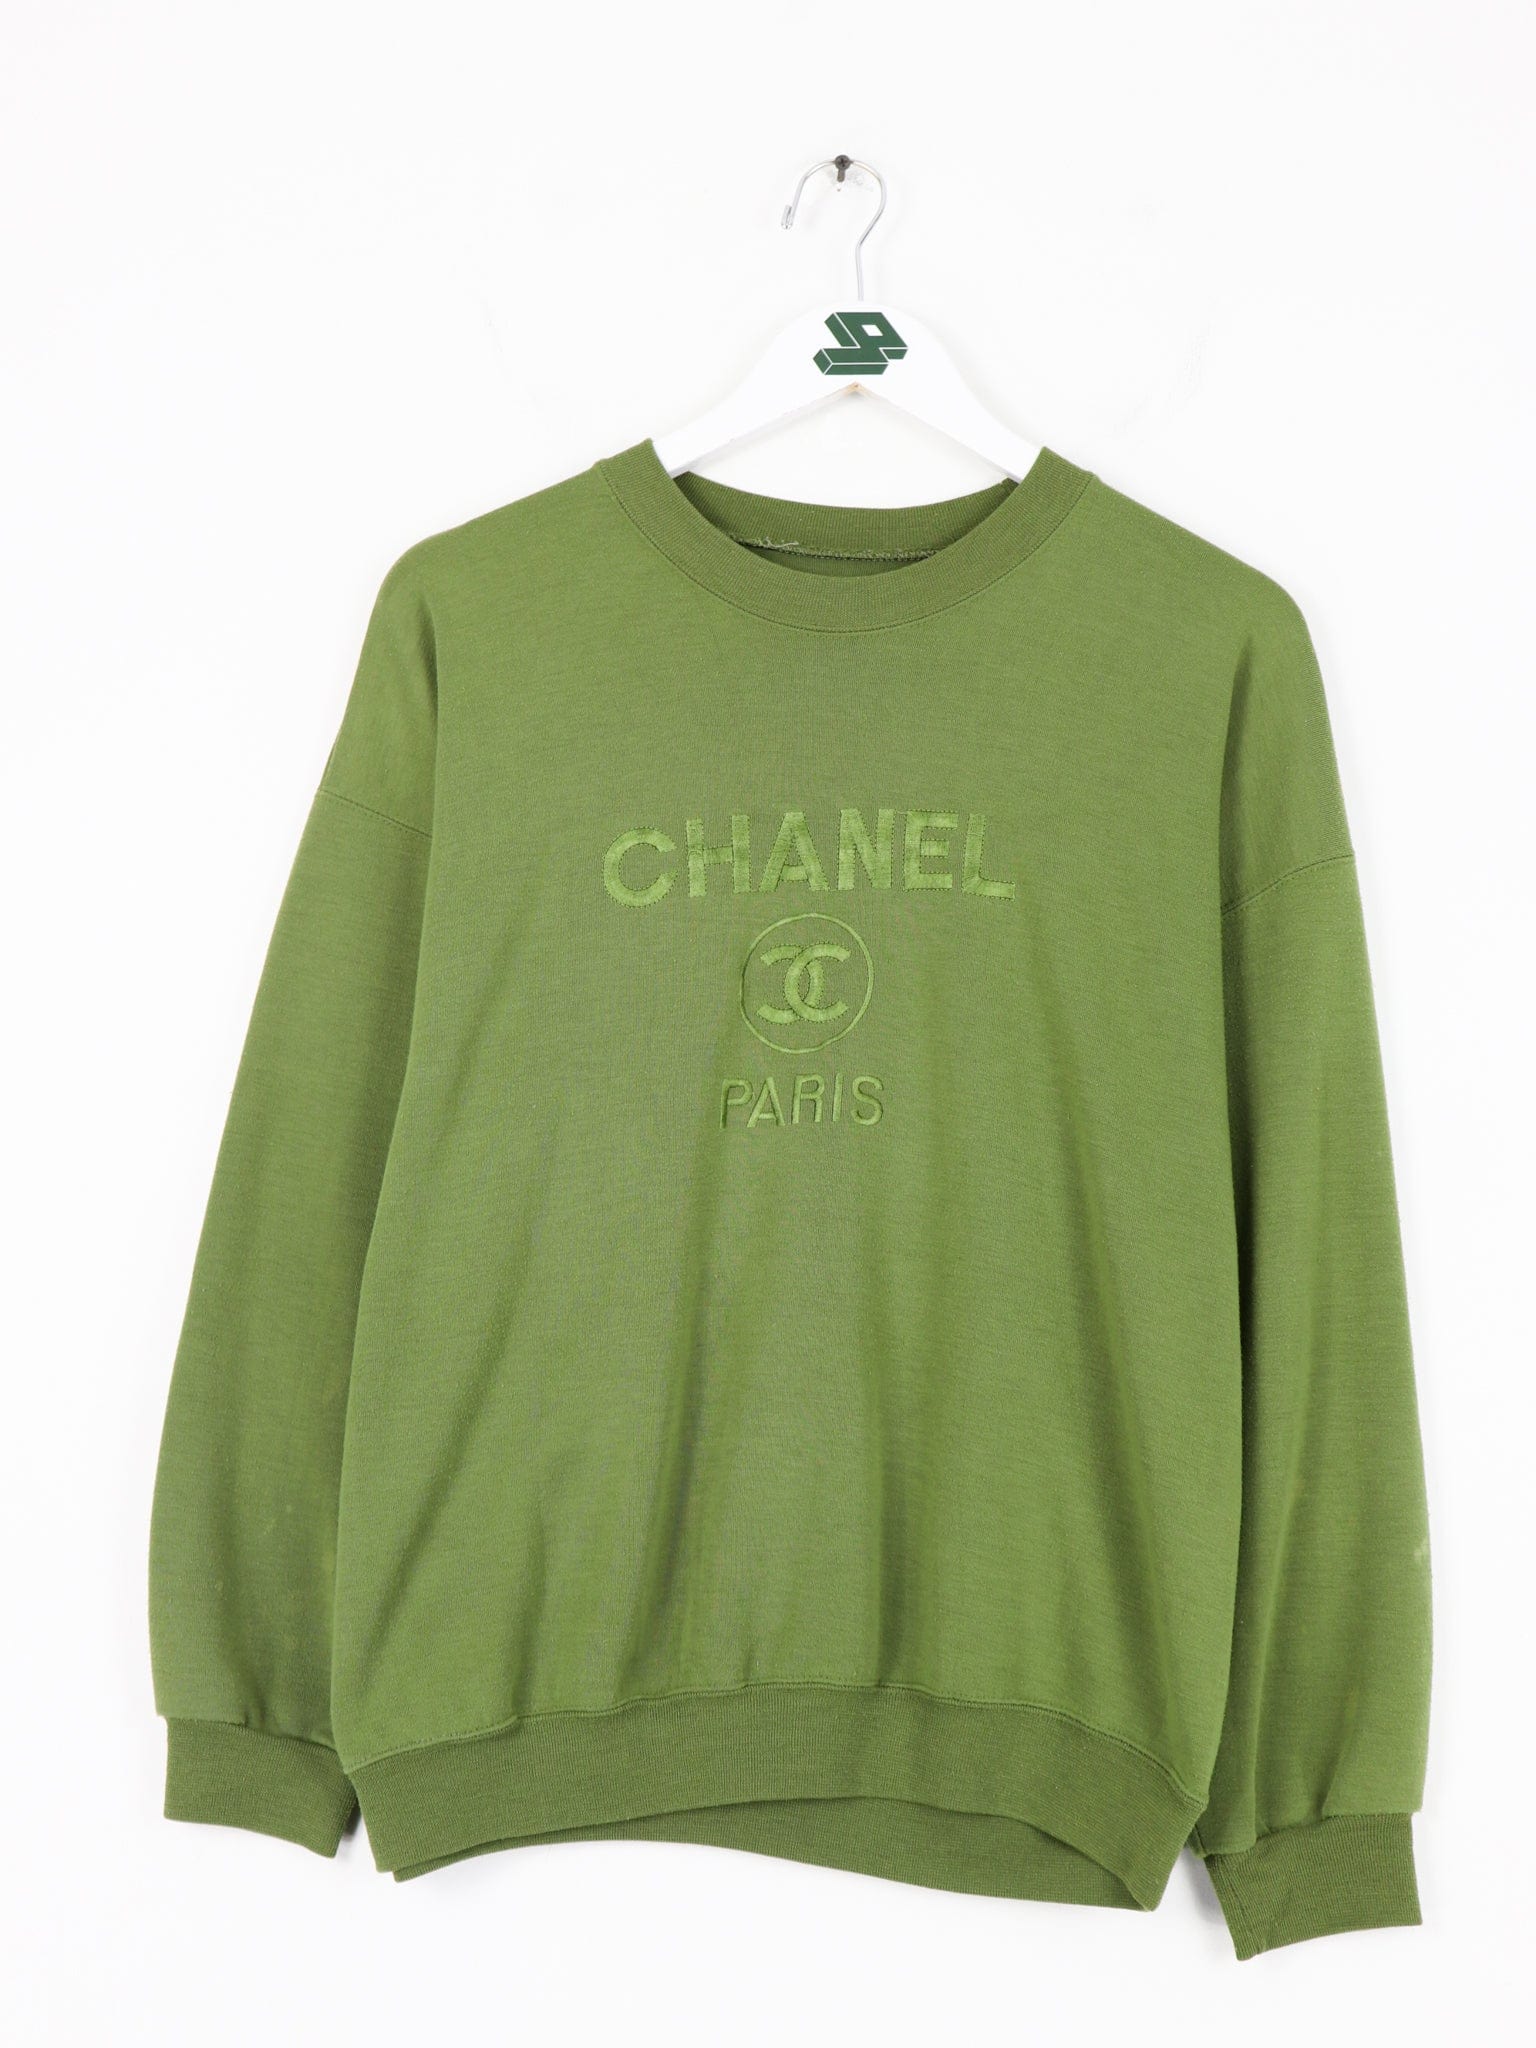 Bootleg Chanel Sweatshirt Size Small – Proper Vintage